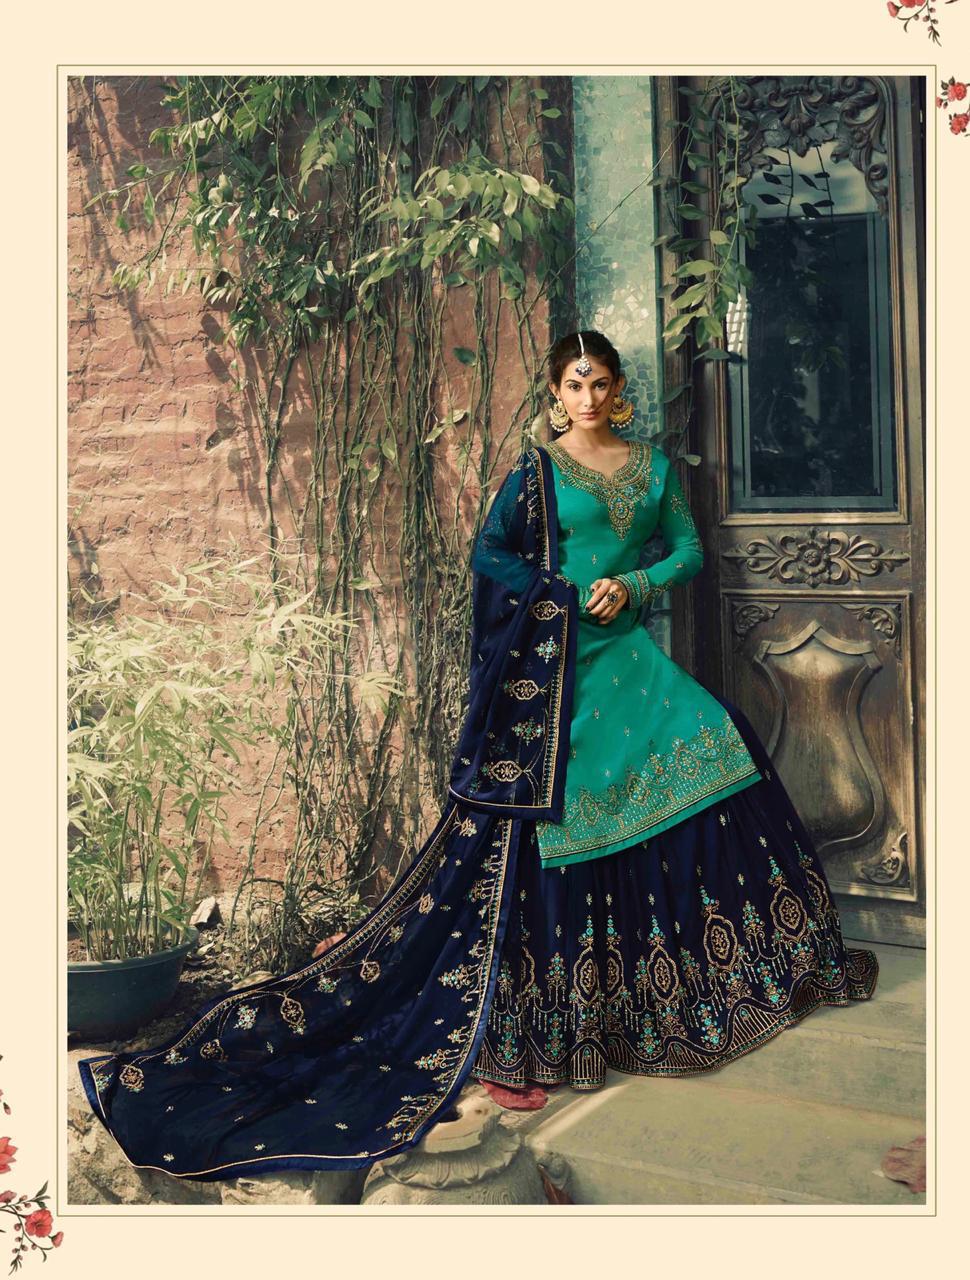 Glossy Presents Neisha  Designer Satin Georgette Embroidery Work Straight Salwar Suit Wholesaler